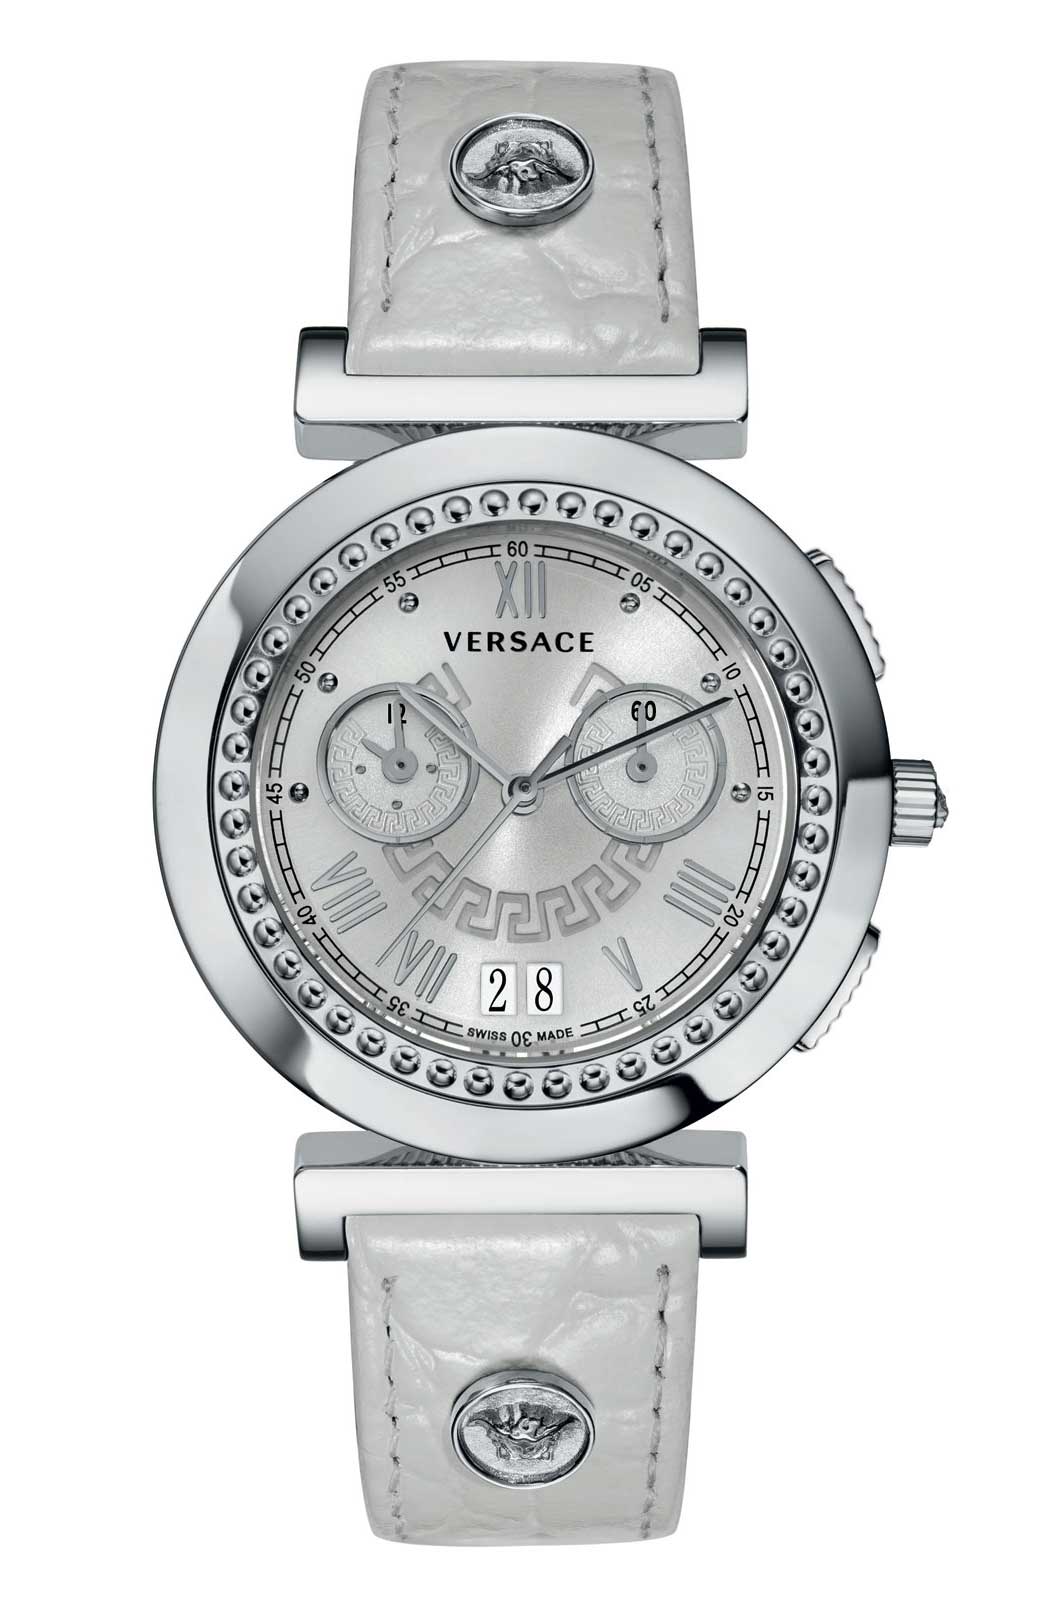 Versace QUARTZ watch 5020B GREY